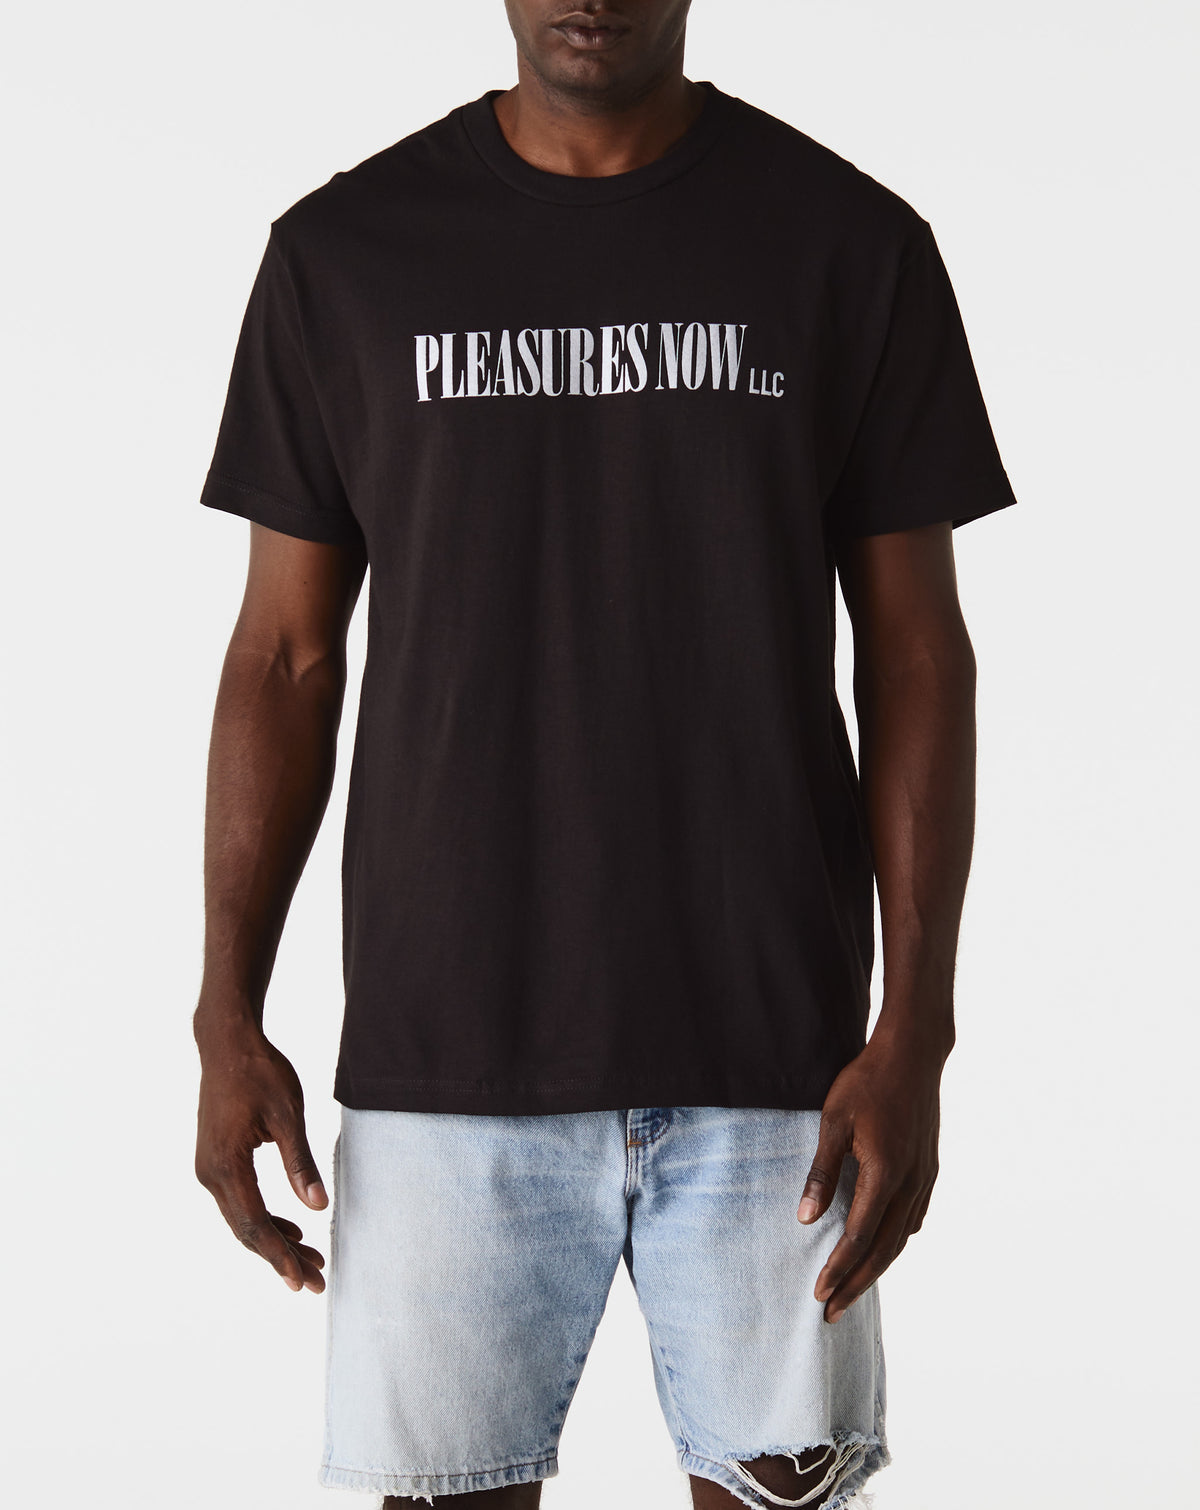 Pleasures LLC T-Shirt - Rule of Next Apparel